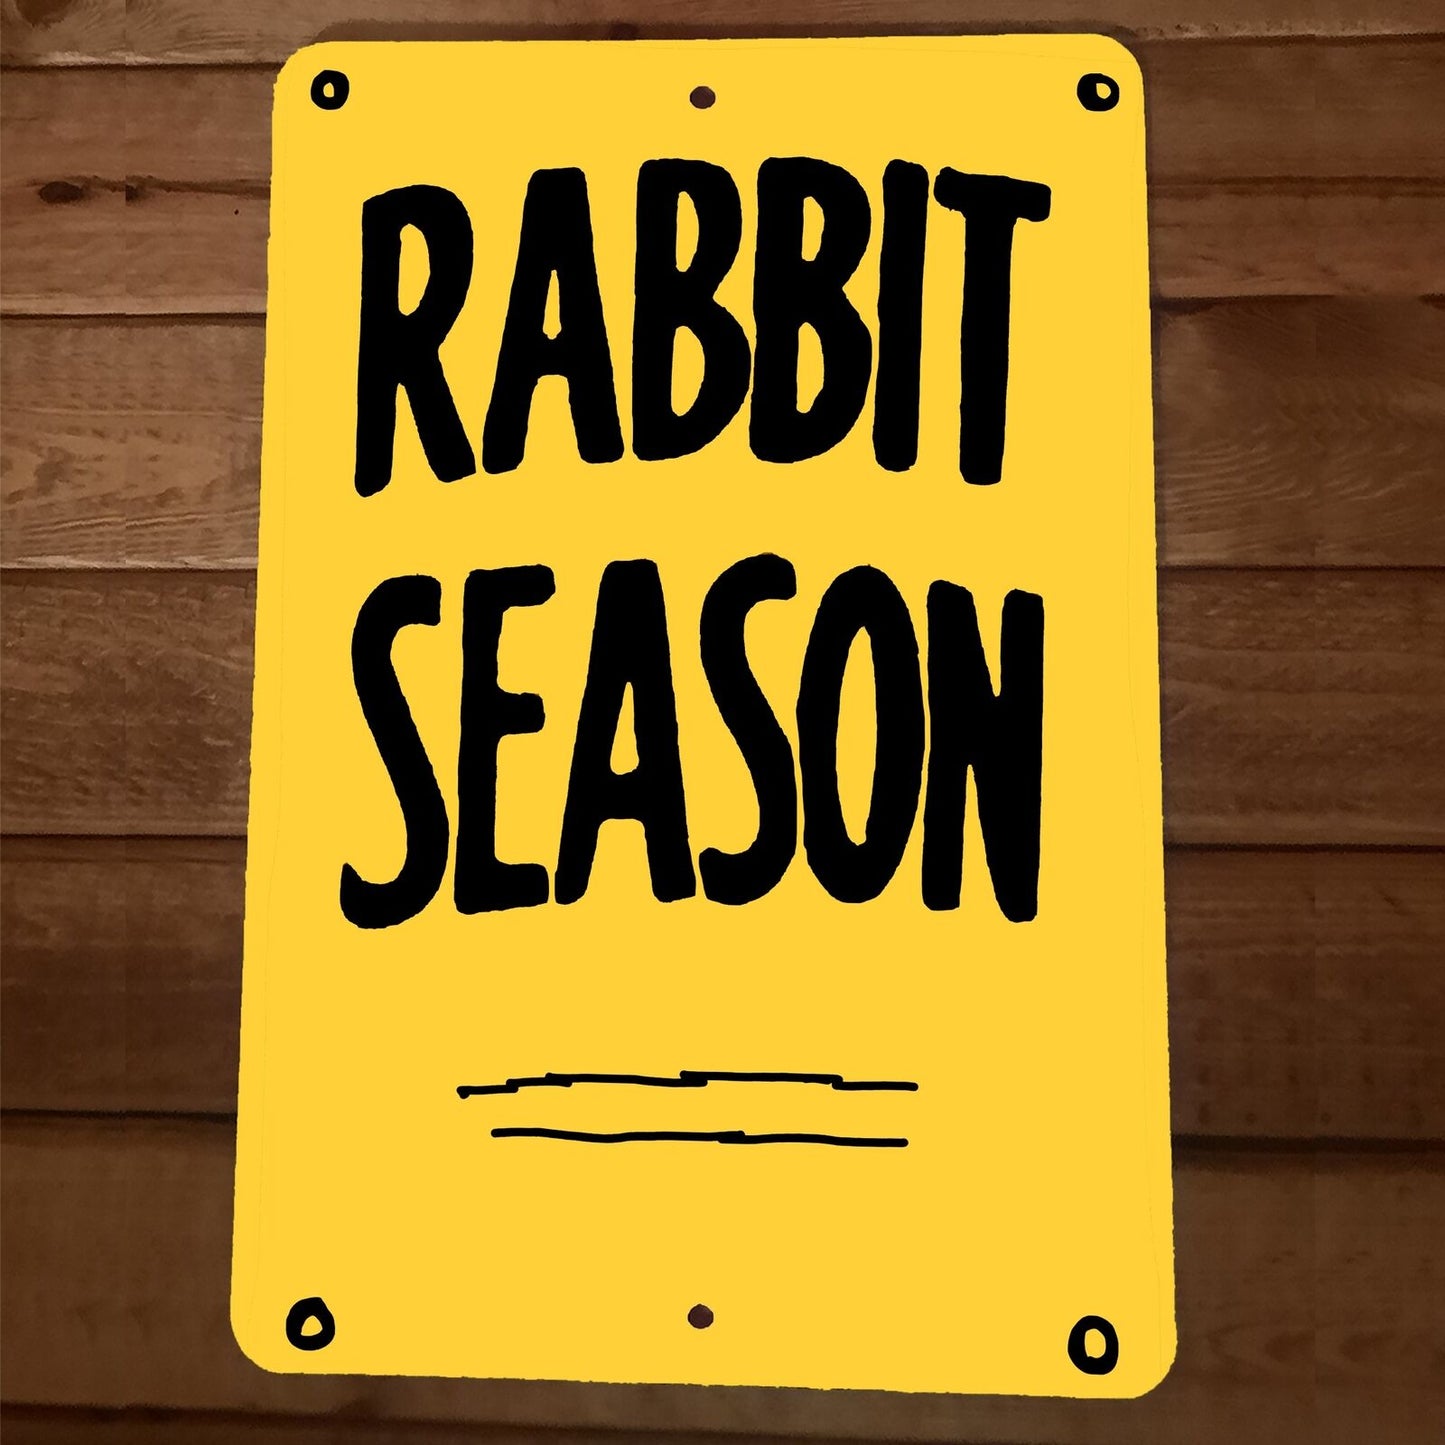 Rabbit Season 8x12 Wall Sign Looney Toons Tunes